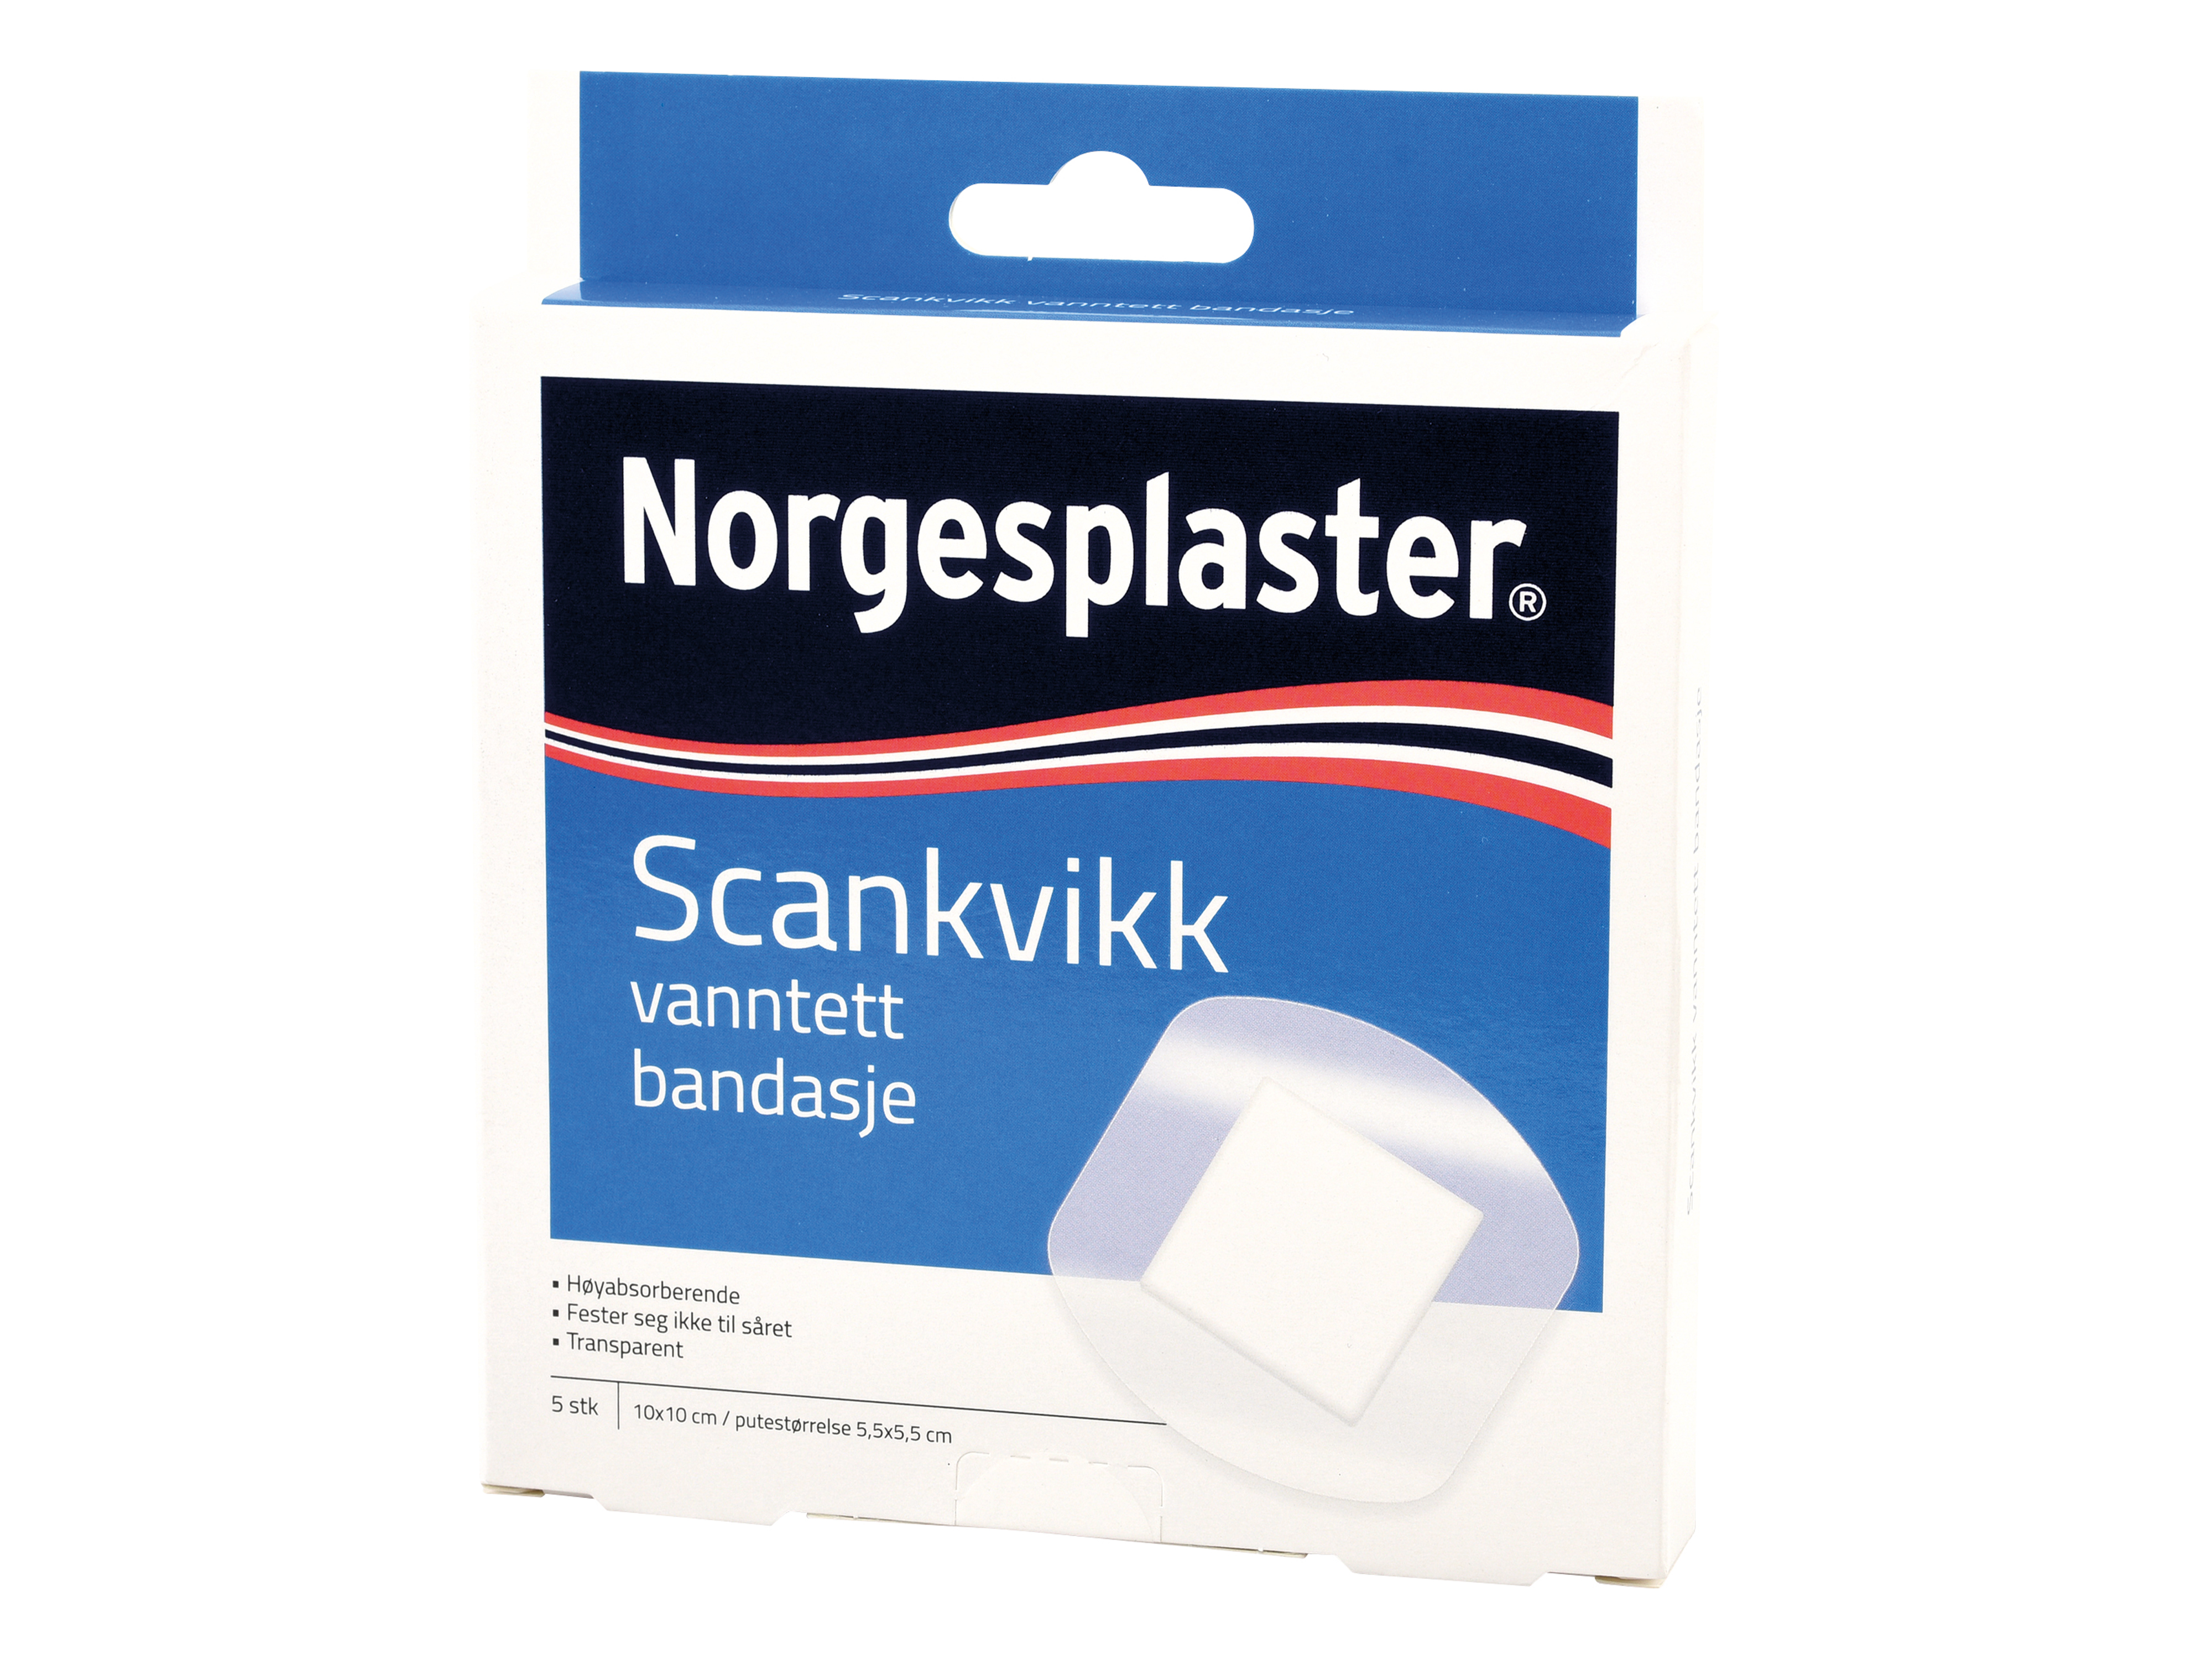 Norgesplaster Scankvikk vanntett bandasje, 10x10 cm, 5 stk.